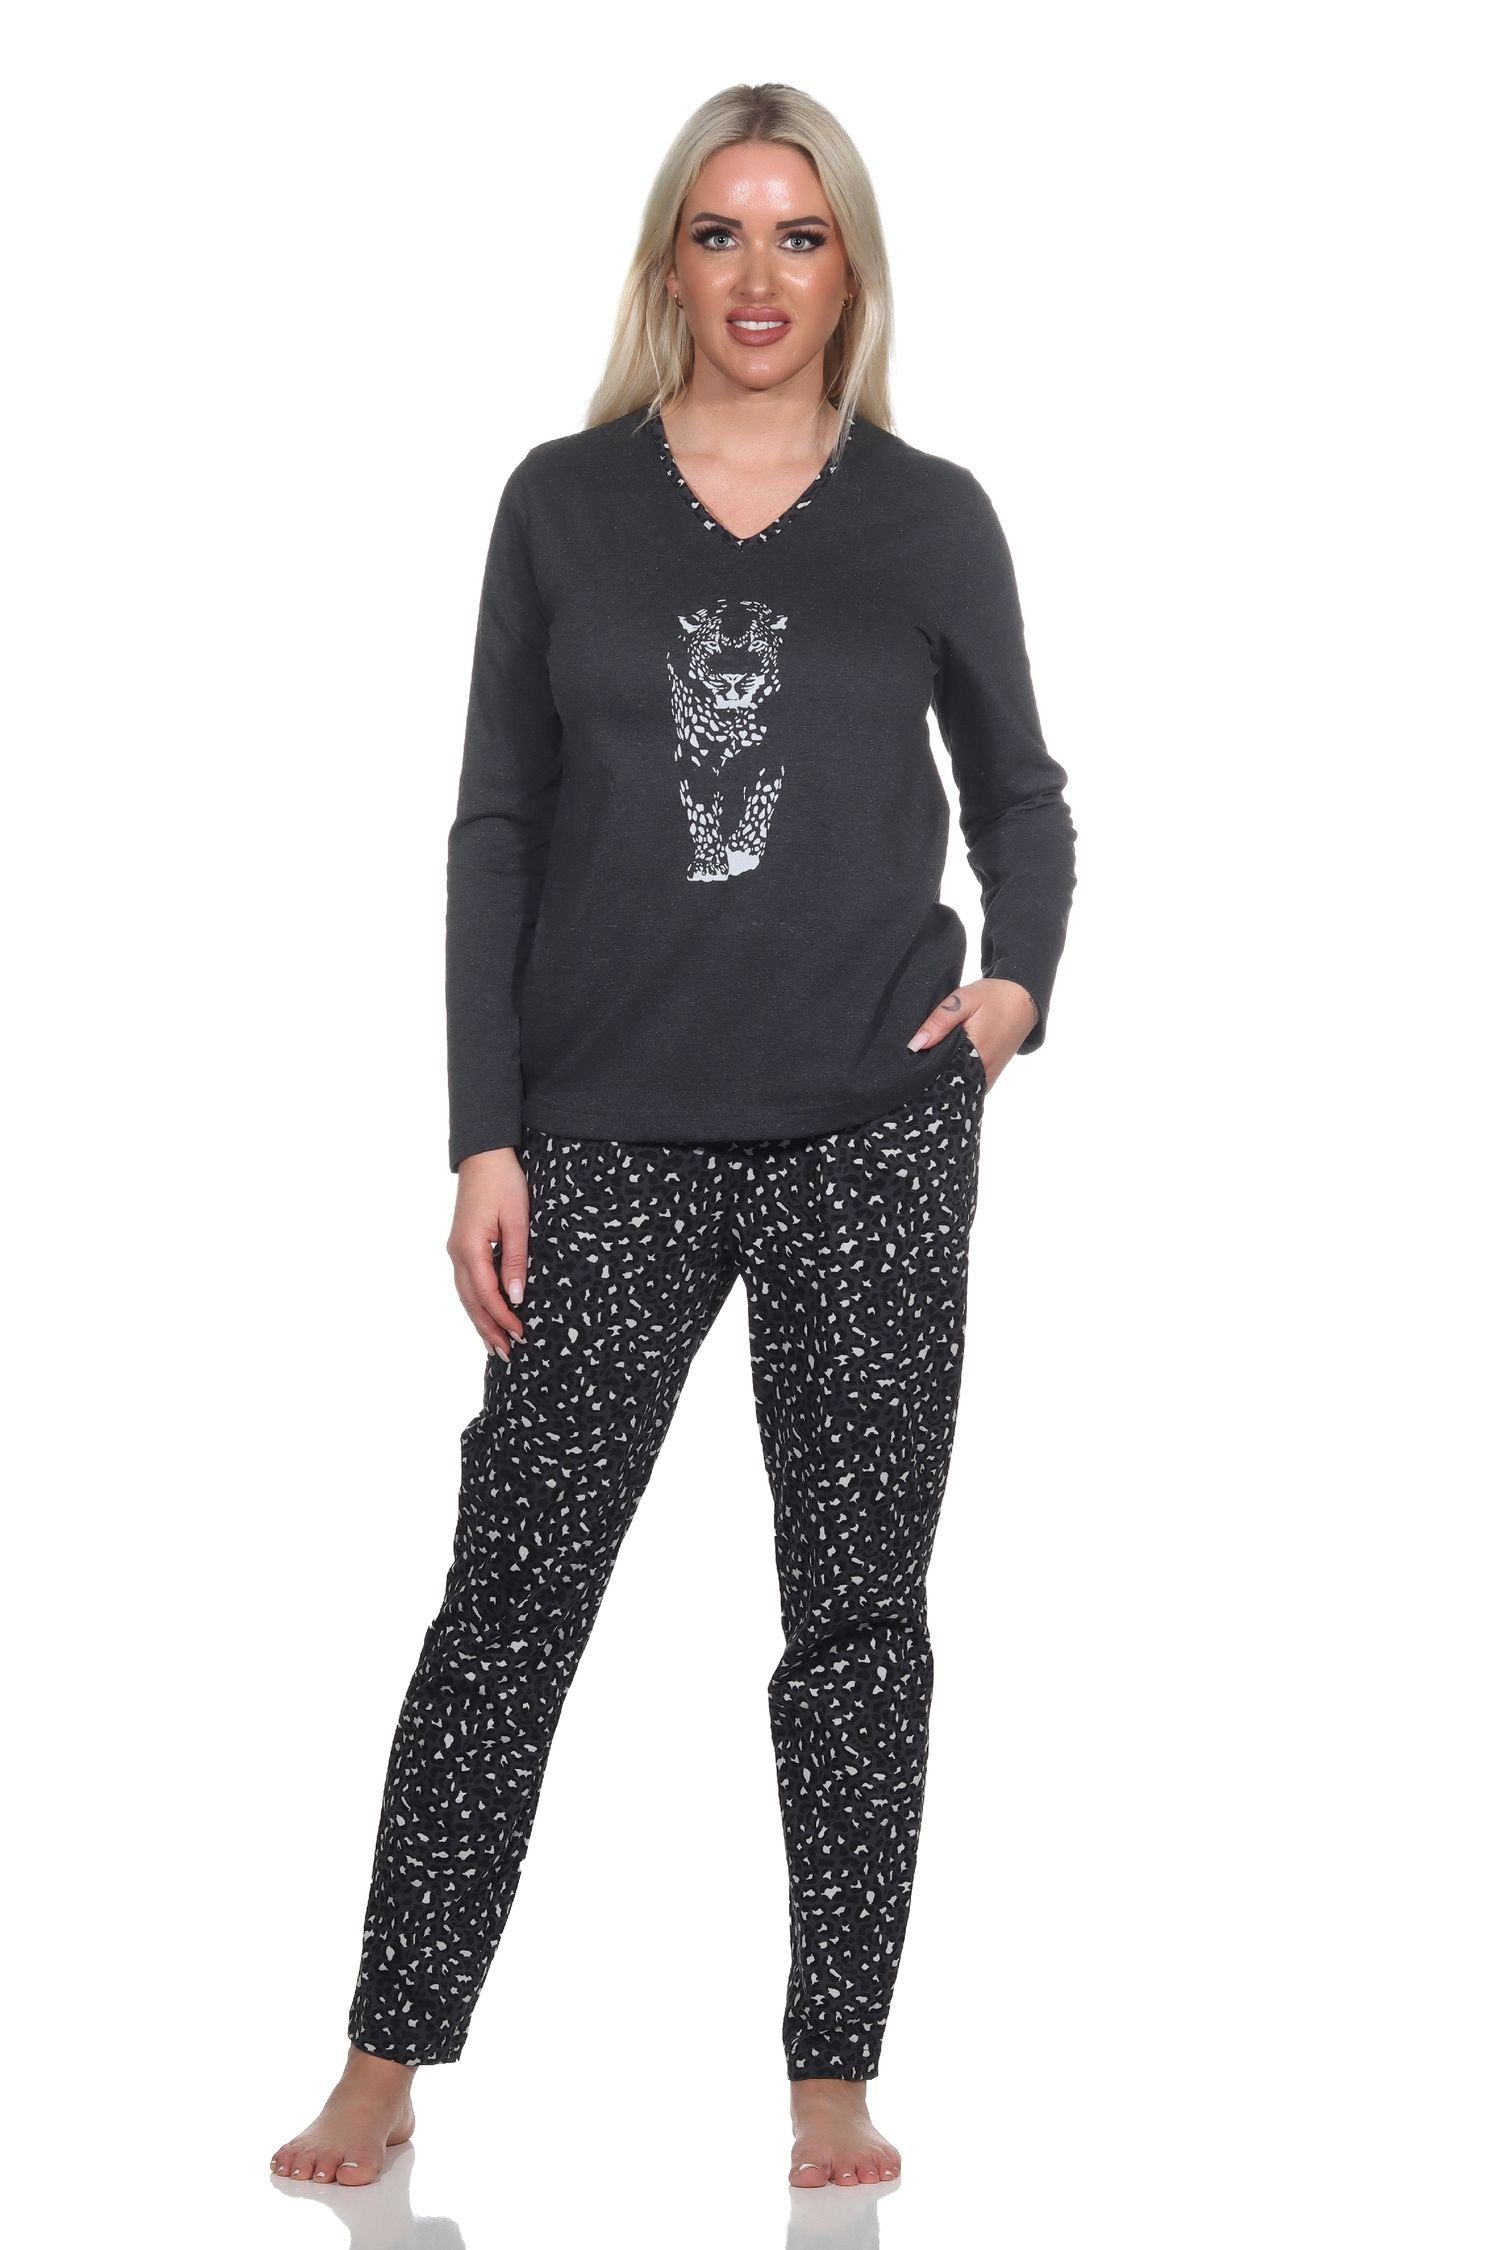 Normann Pyjama Damen im Schlafanzug Hose Langarm anthrazit-mel. Tiermotiv, mit Animal-Print-Look